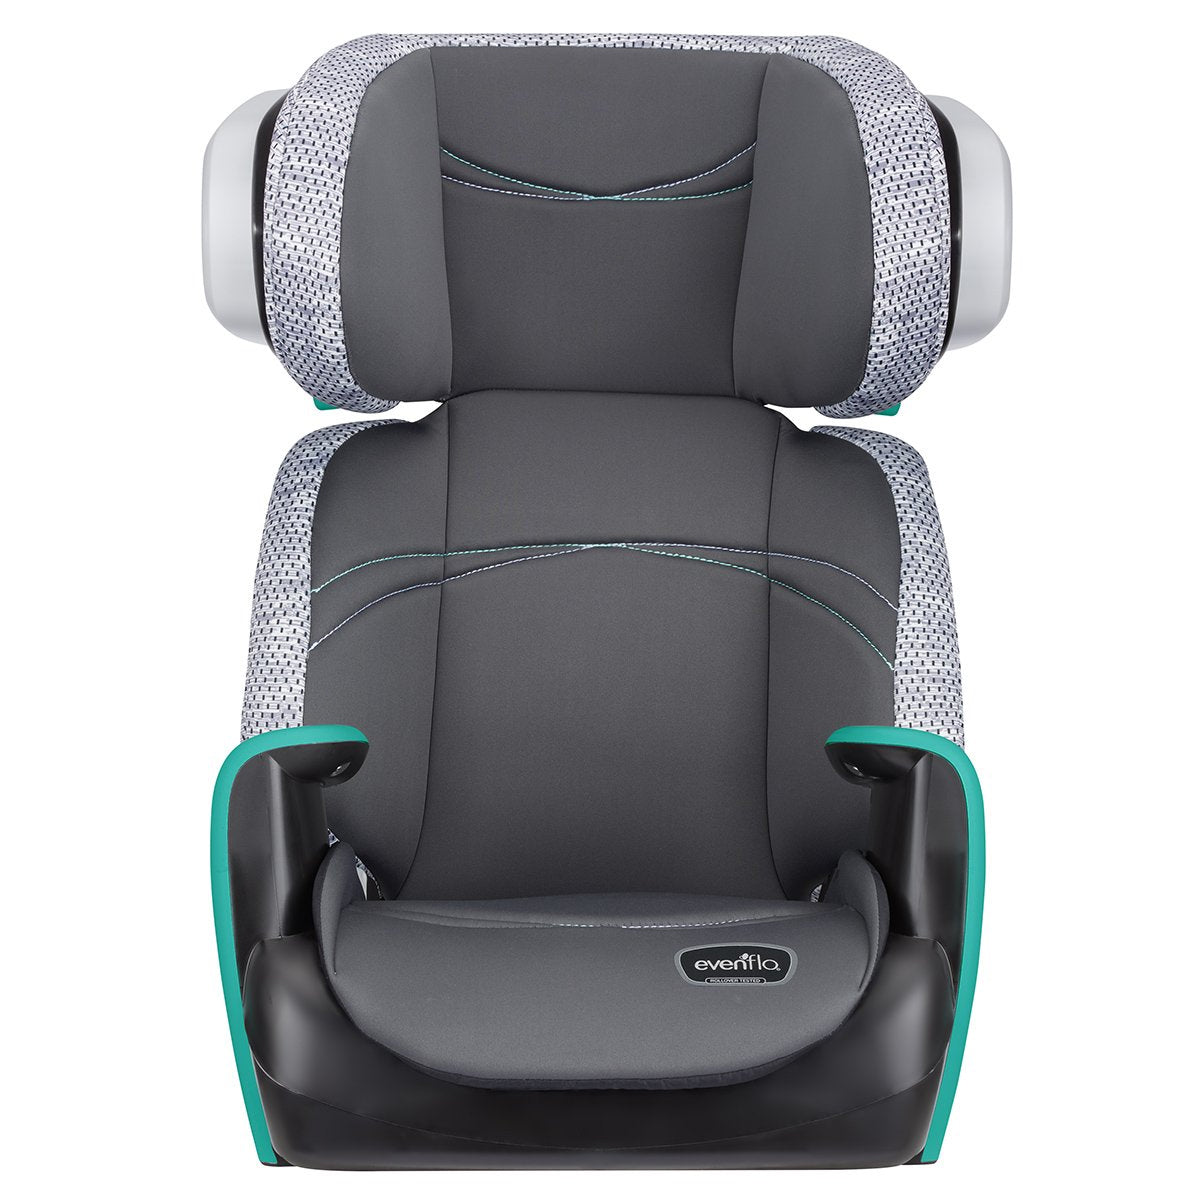 Evenflo Spectrum 2-in-1 Booster Seat, Ergonomic Seat Base